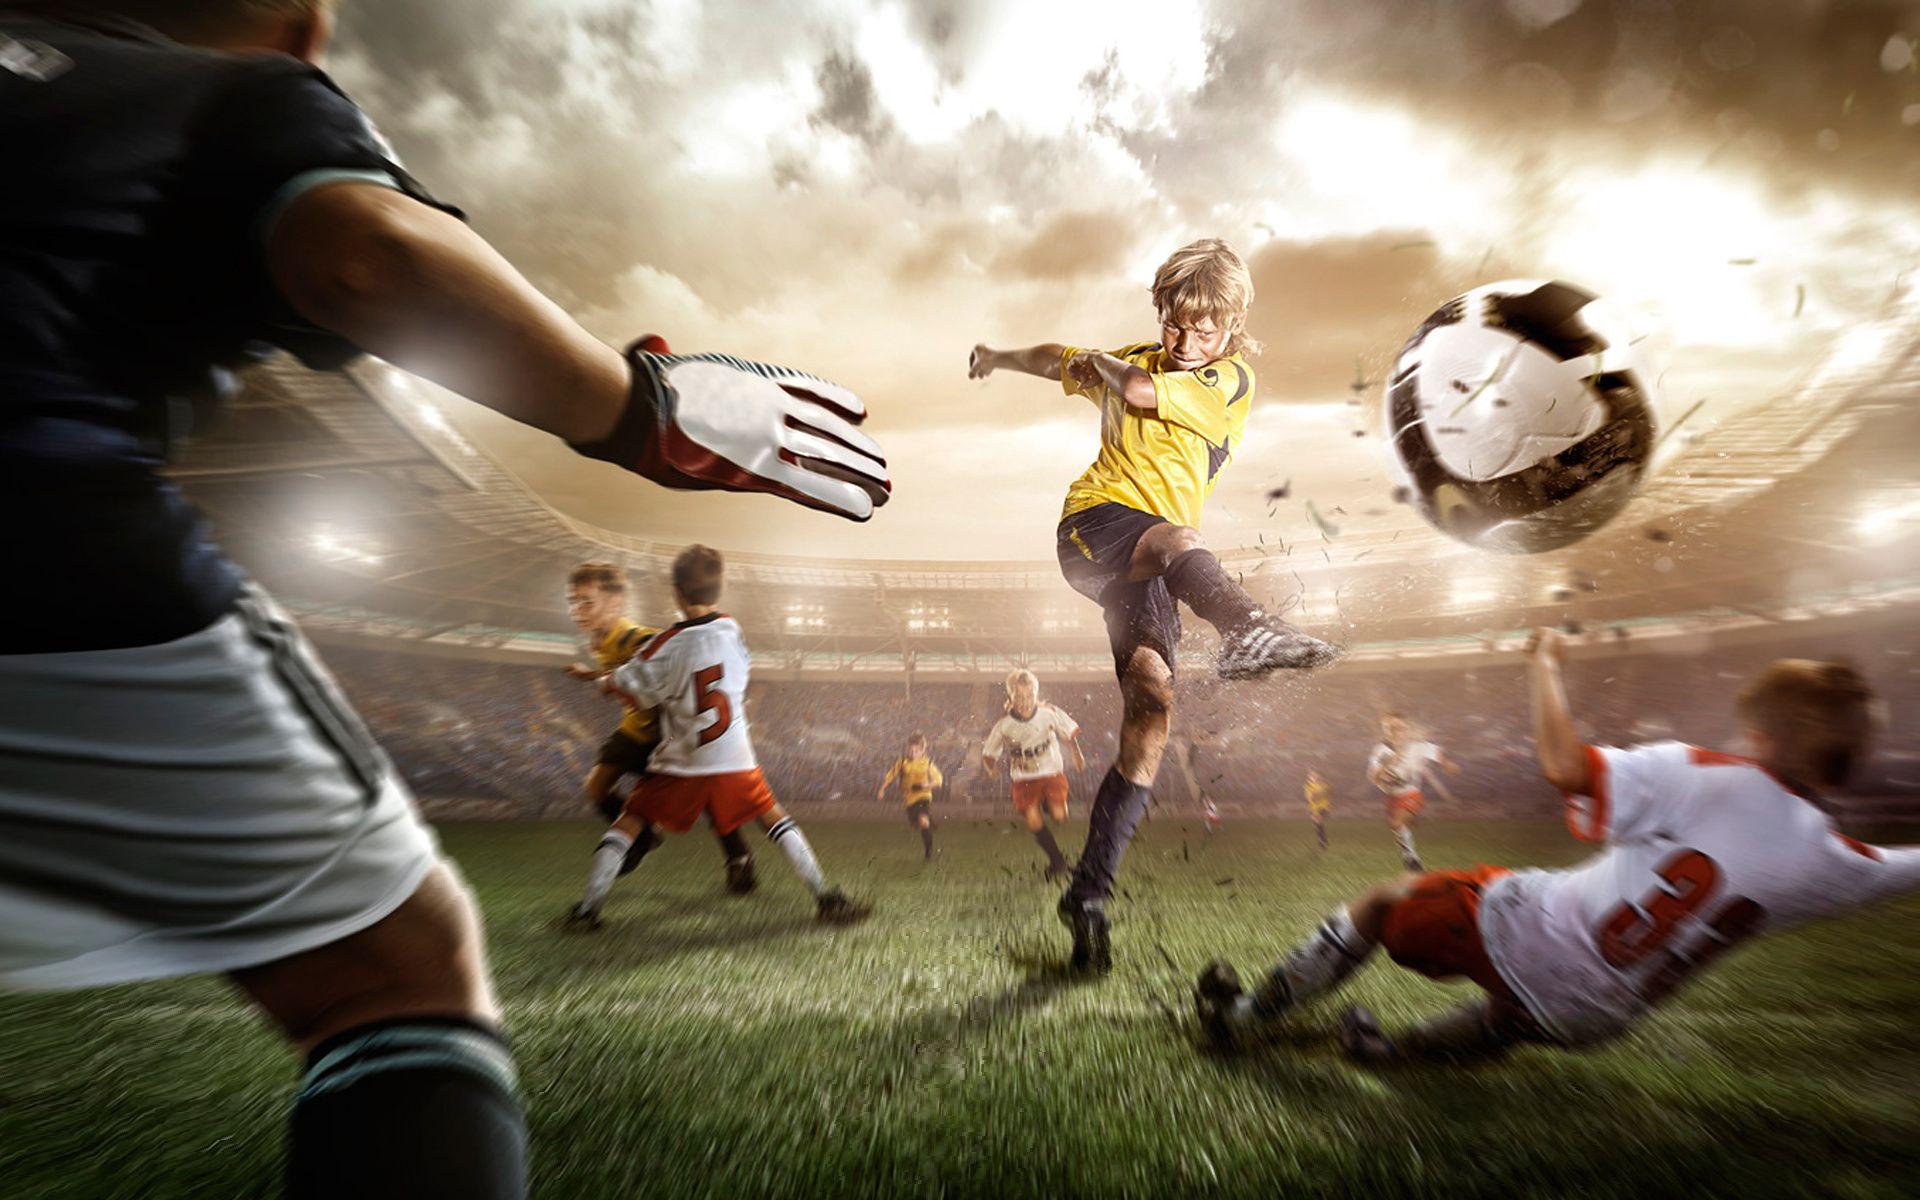 Cool Soccer Desktop Wallpapers - Top Free Cool Soccer ...